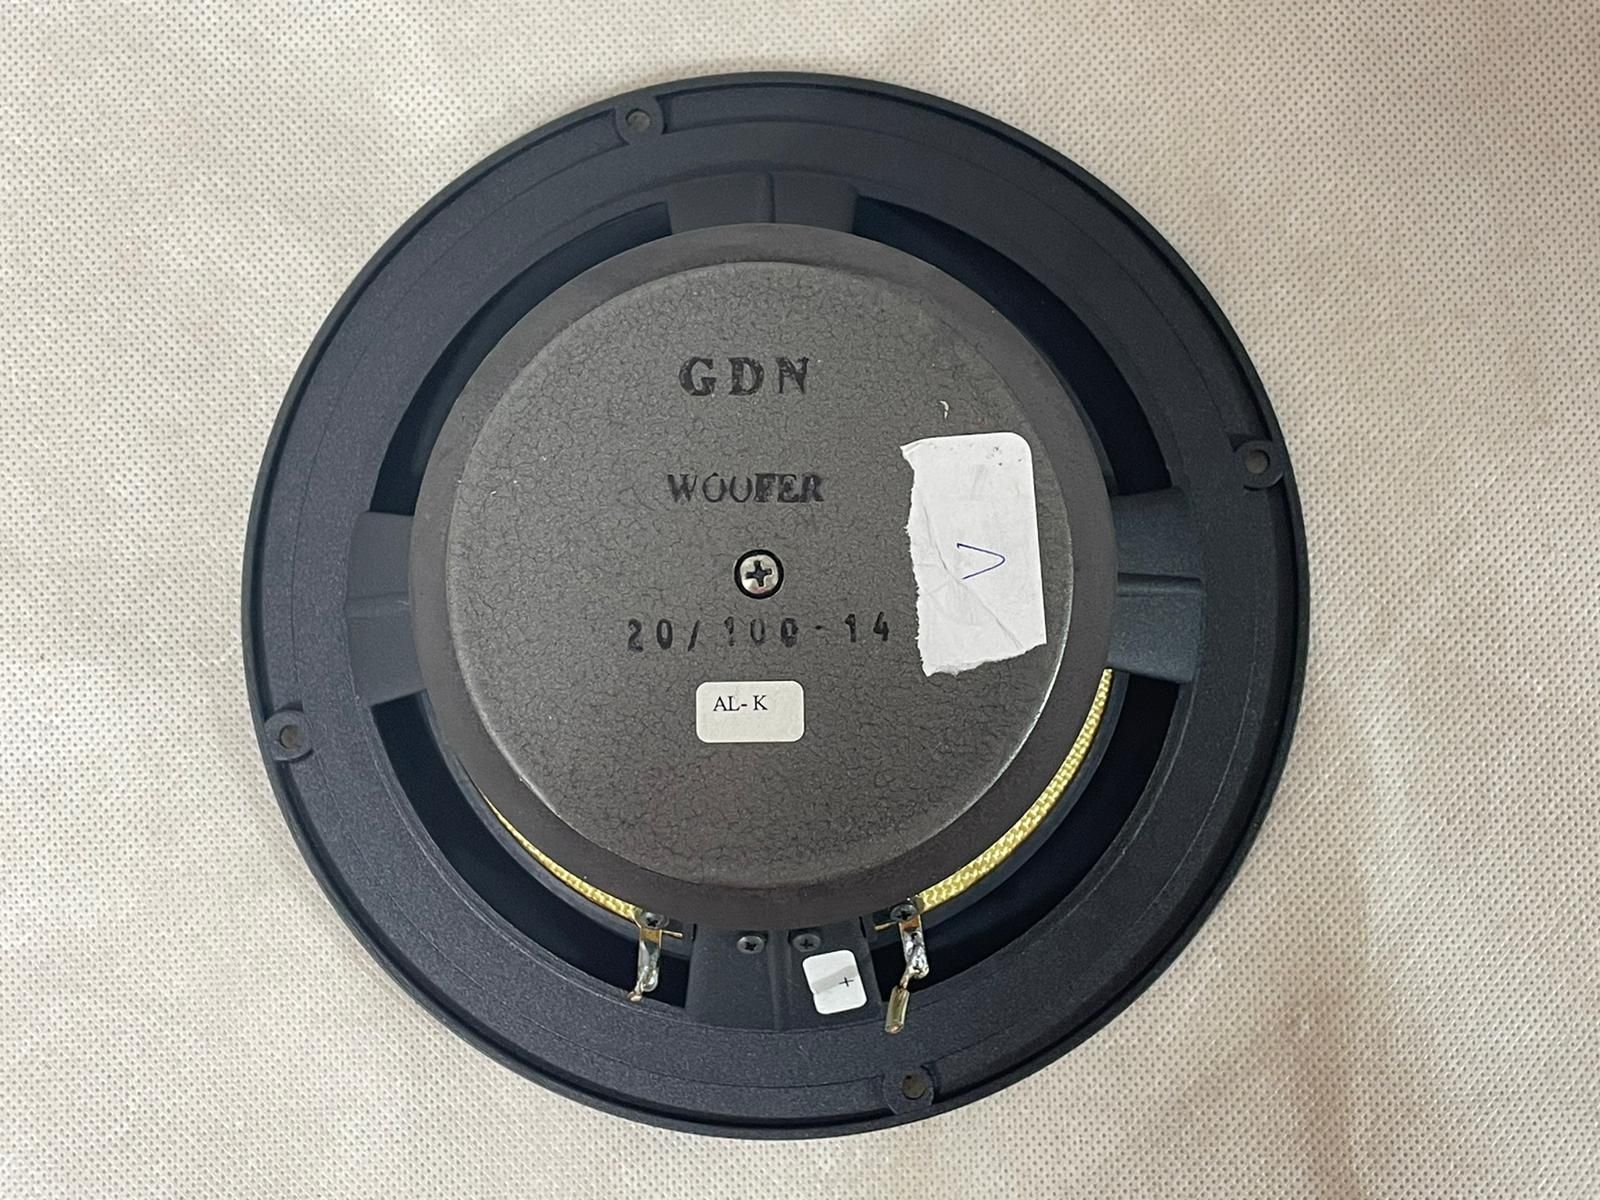 Głośnik STX GDN 20/100 - 14 Tonsil